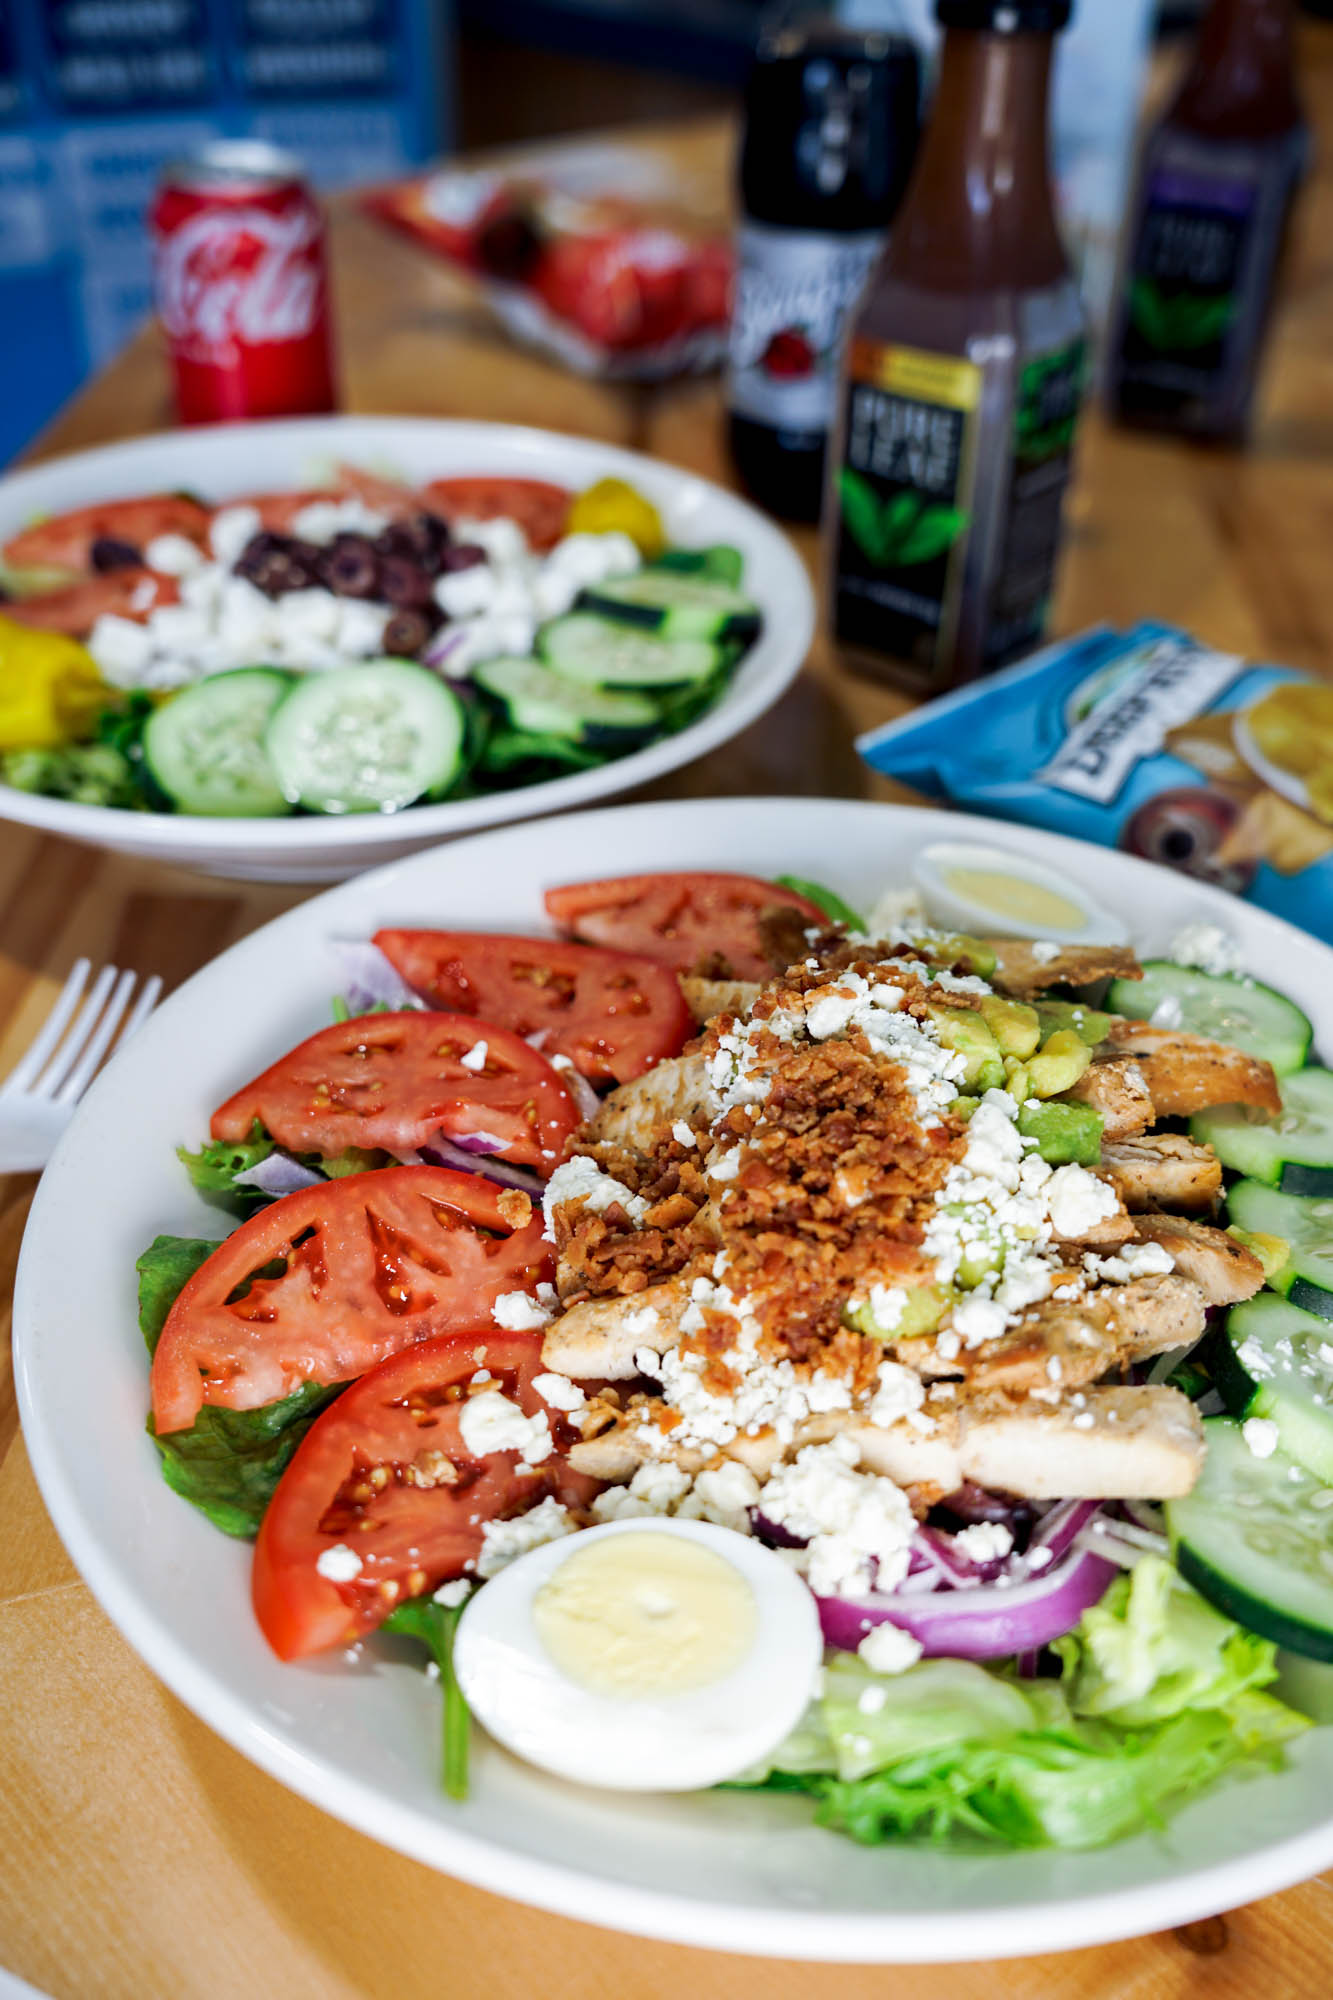 California Cobb salad and Greek salad